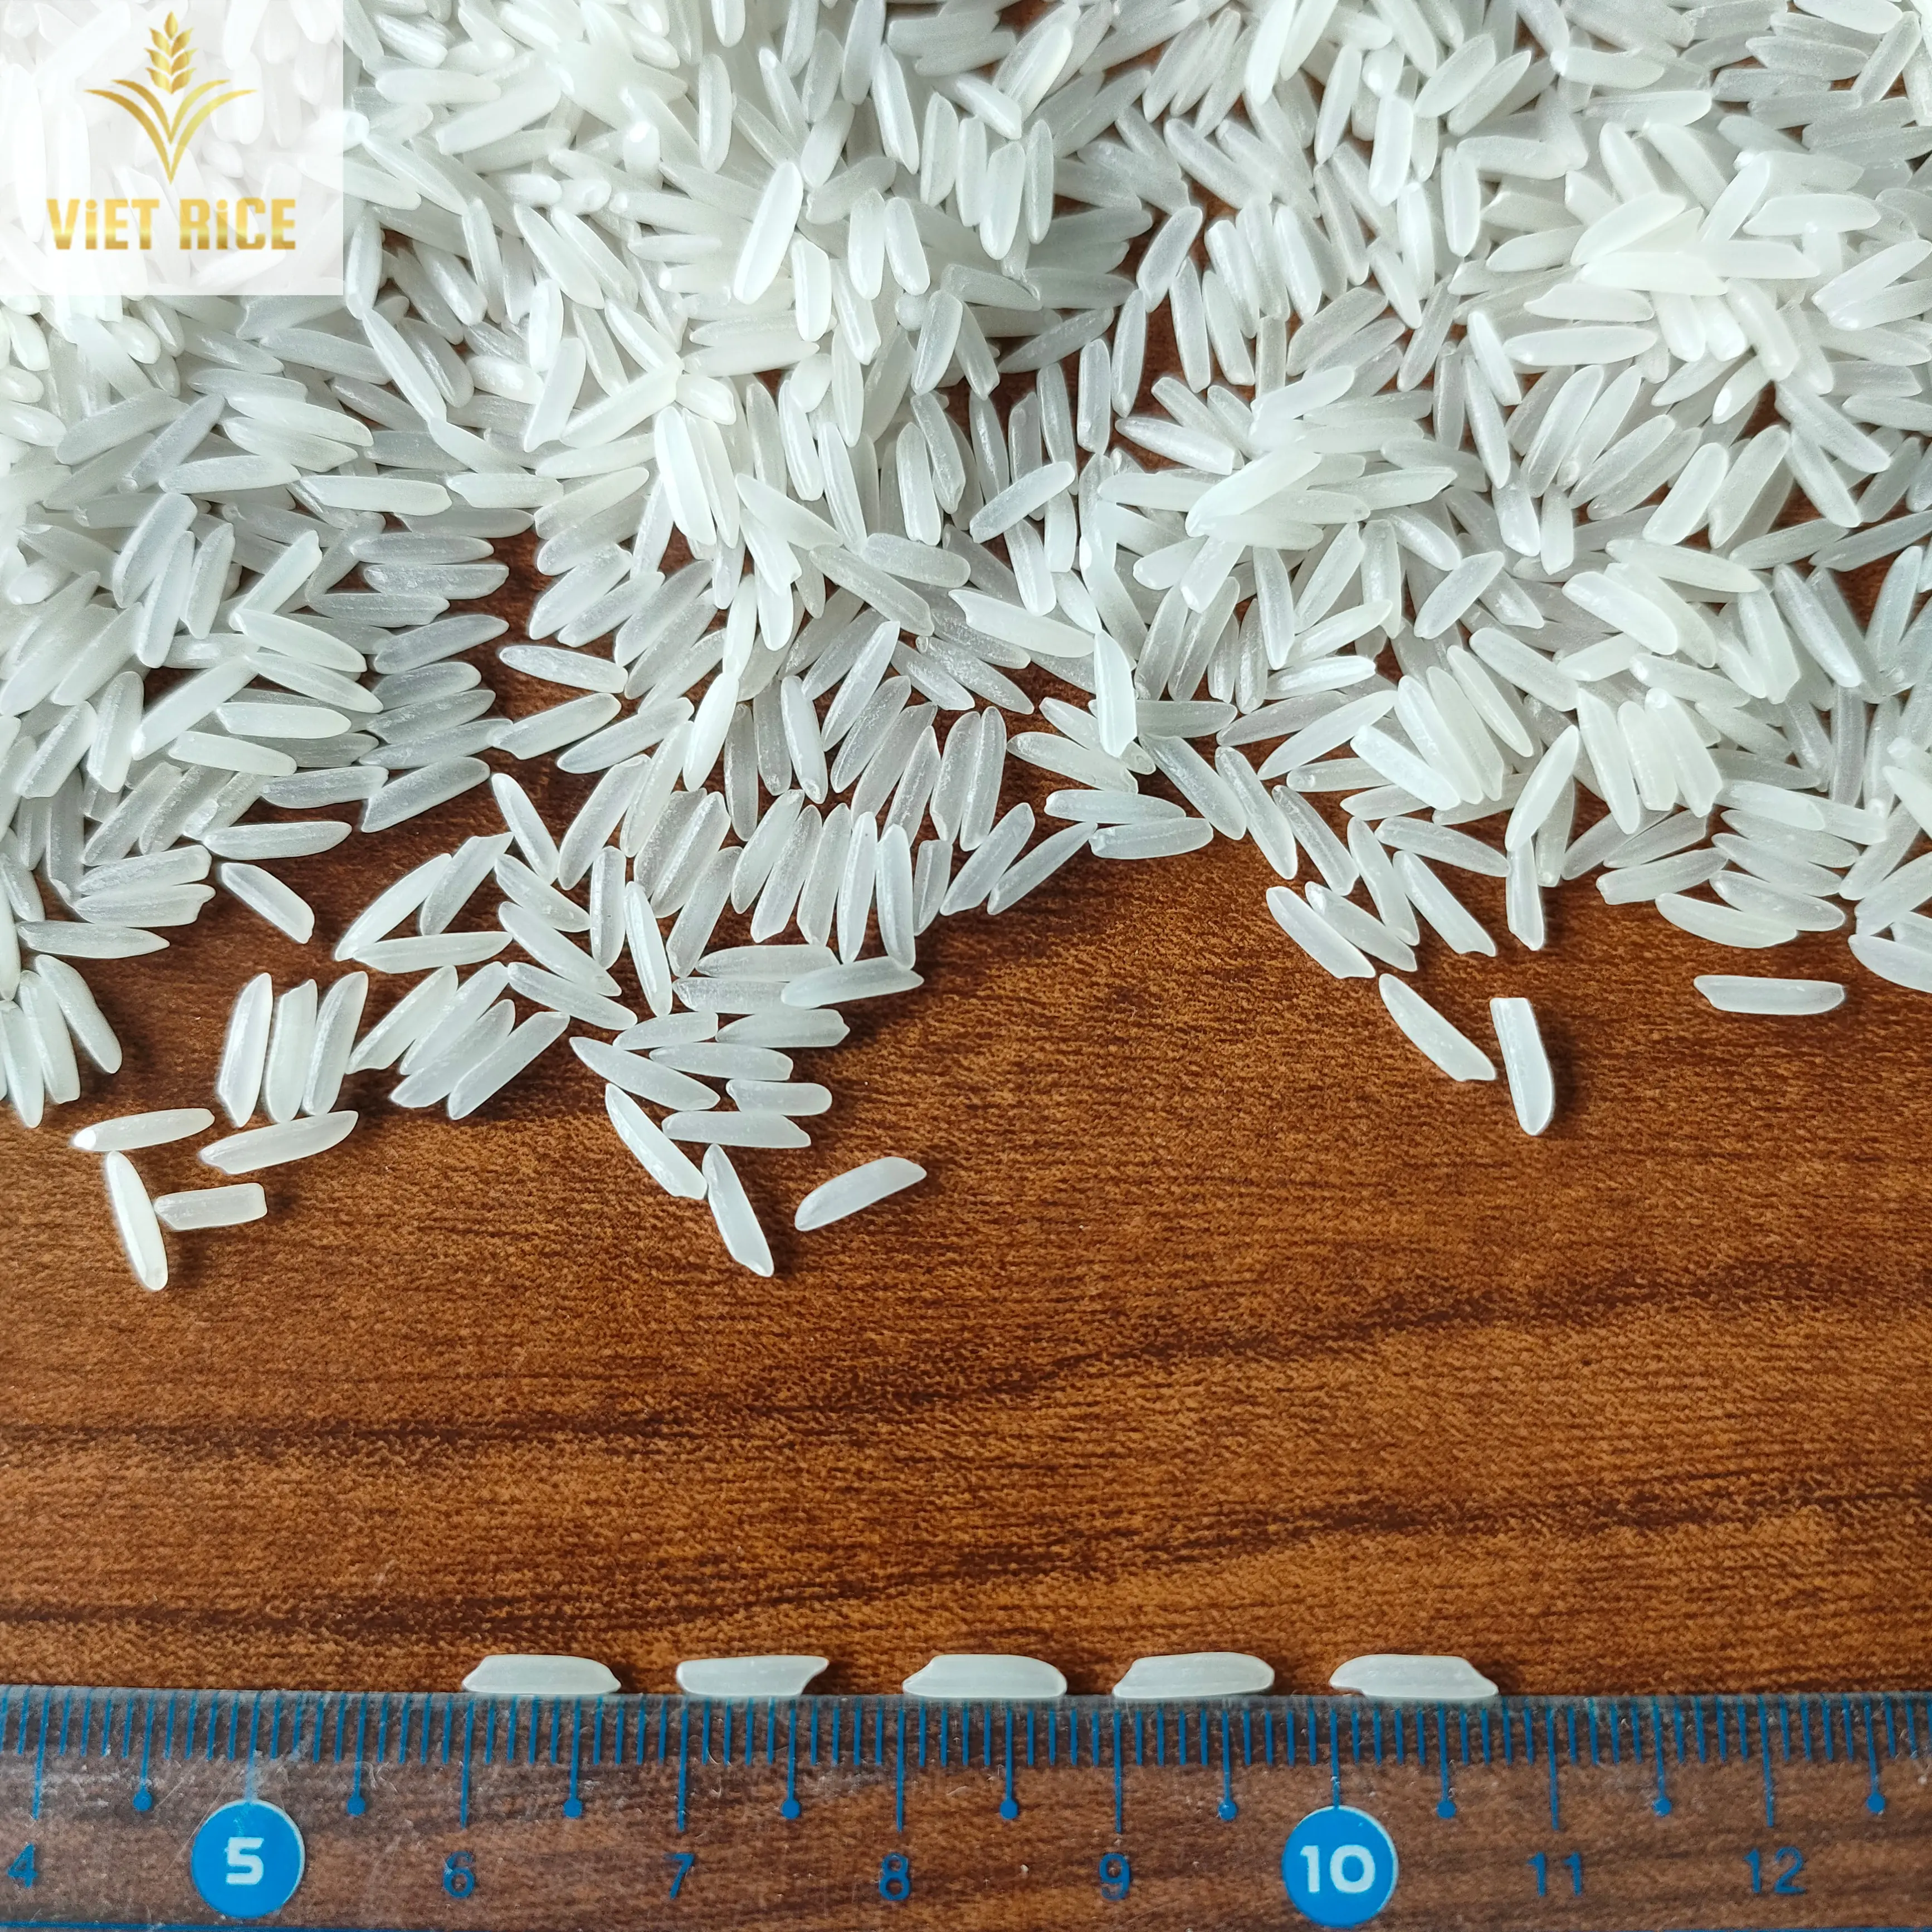 ST25-세계에서 가장 긴 곡물 향기로운 흰 쌀 2019-베트남에서 선도적 인 제조 업체 및 수출자에 의해 공급